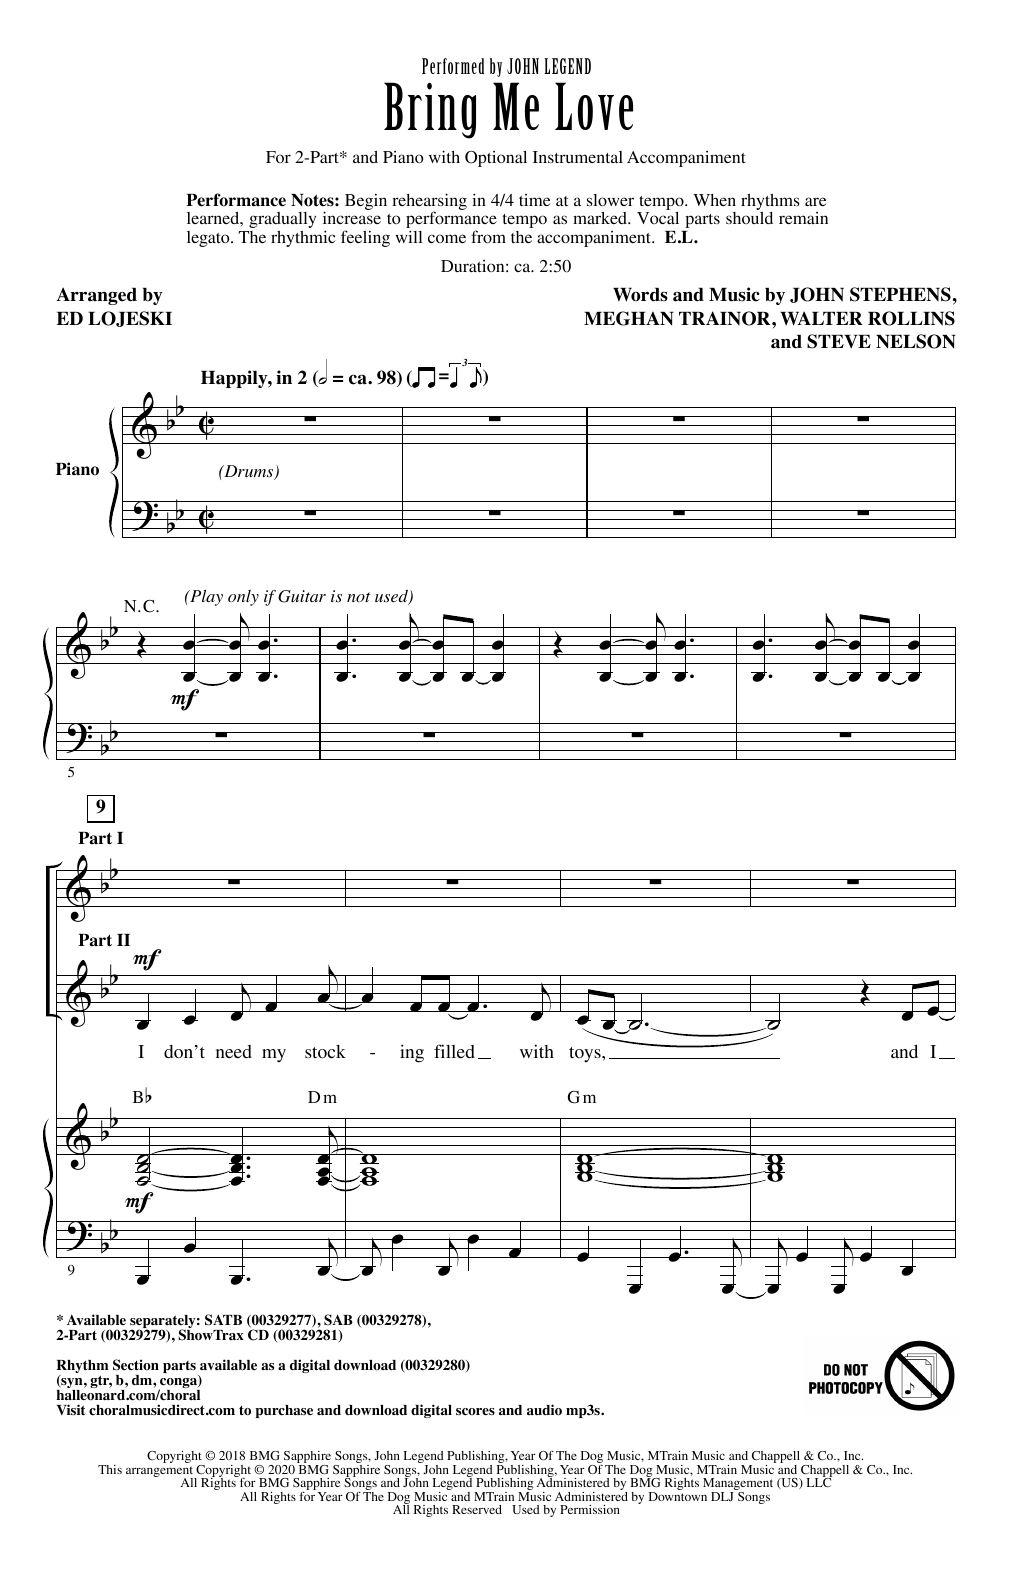 John Legend Bring Me Love (arr. Ed Lojeski) Sheet Music Notes & Chords for SAB Choir - Download or Print PDF